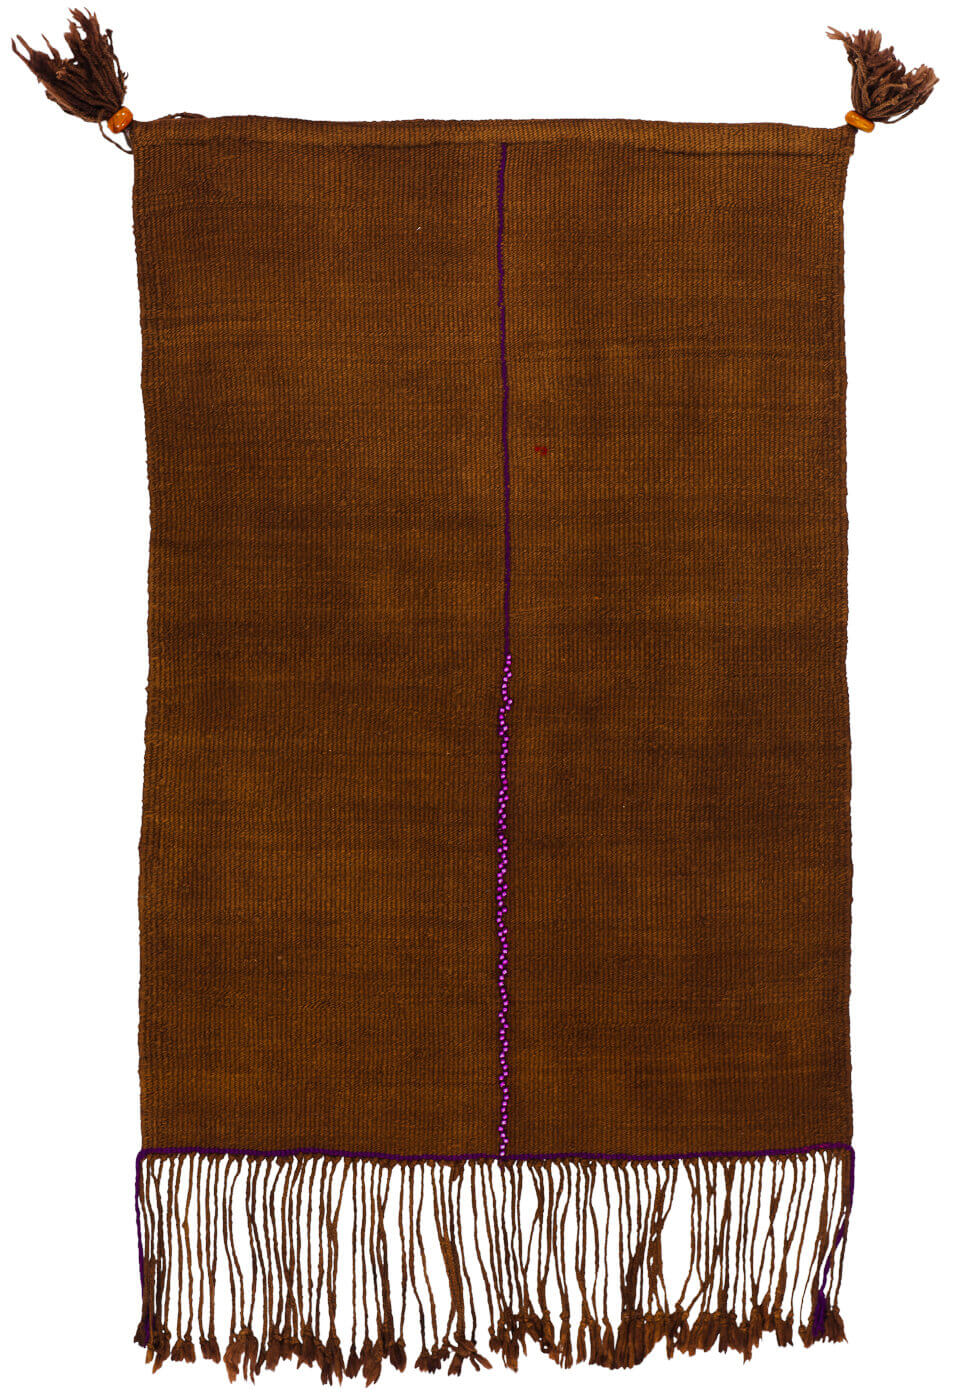 Hand-Woven Tribal Brown & Purple Rug